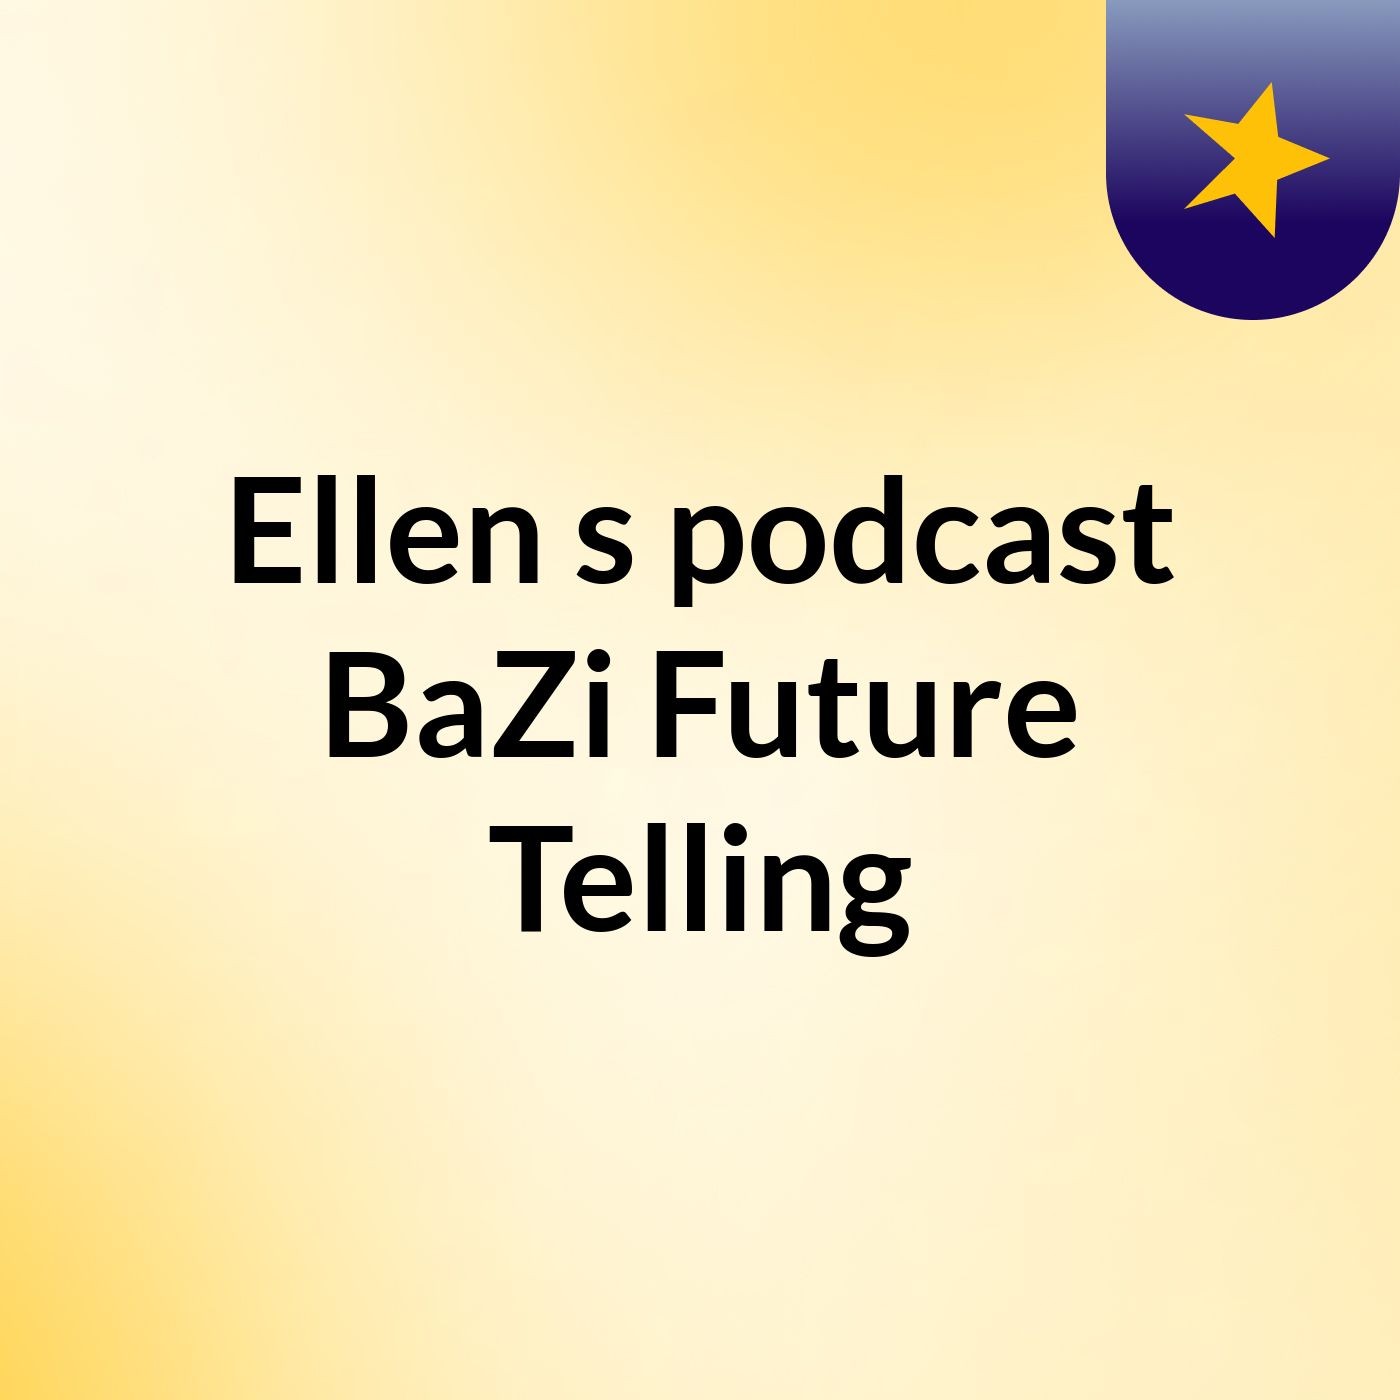 Episode 3 - Ellen's podcast BaZi Future Telling